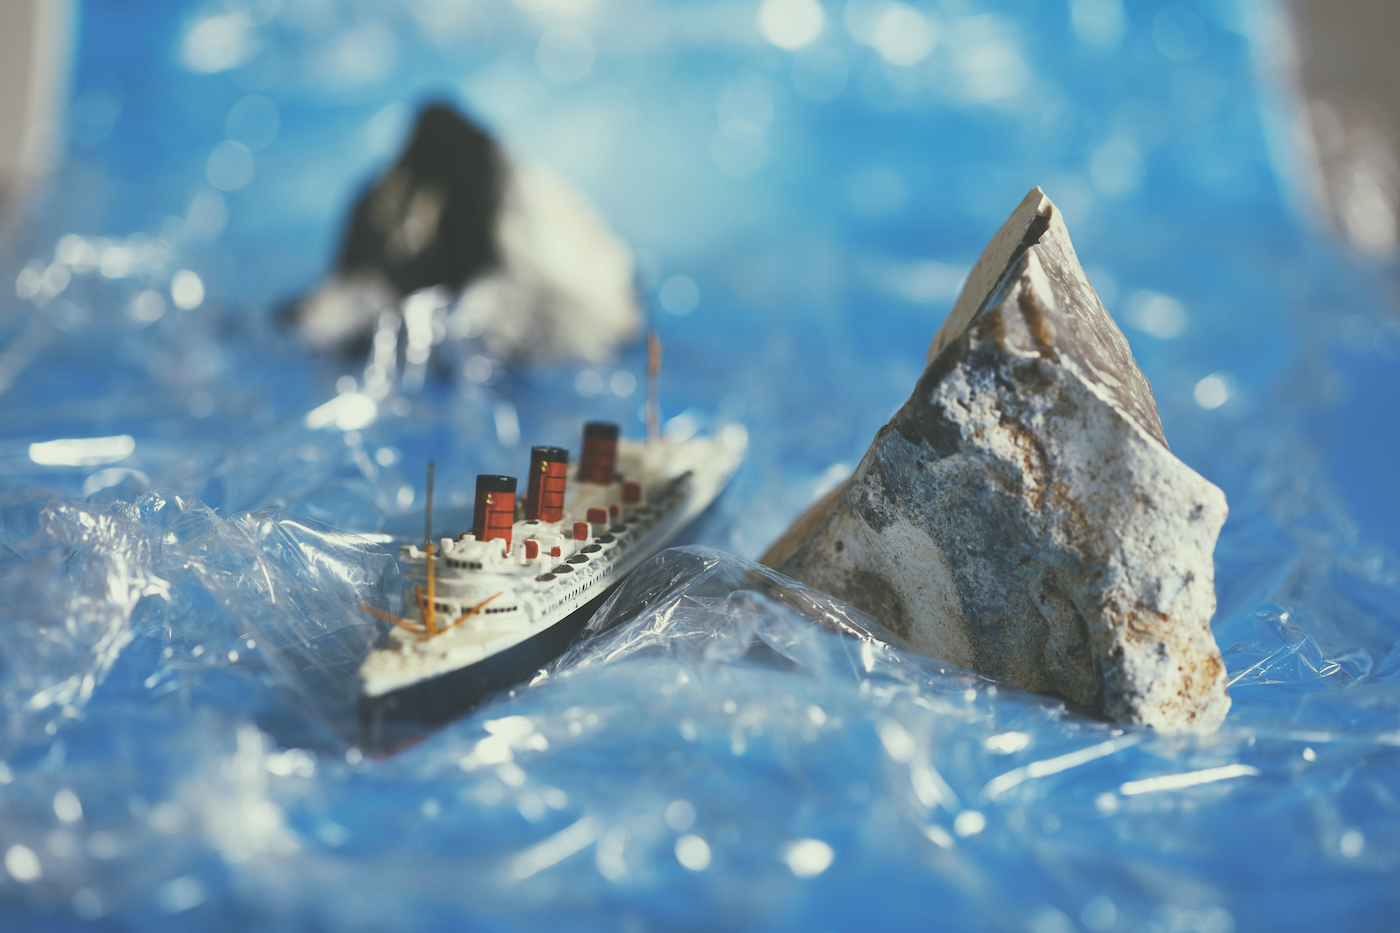 Flints with miniature model of a self-made passenger ship